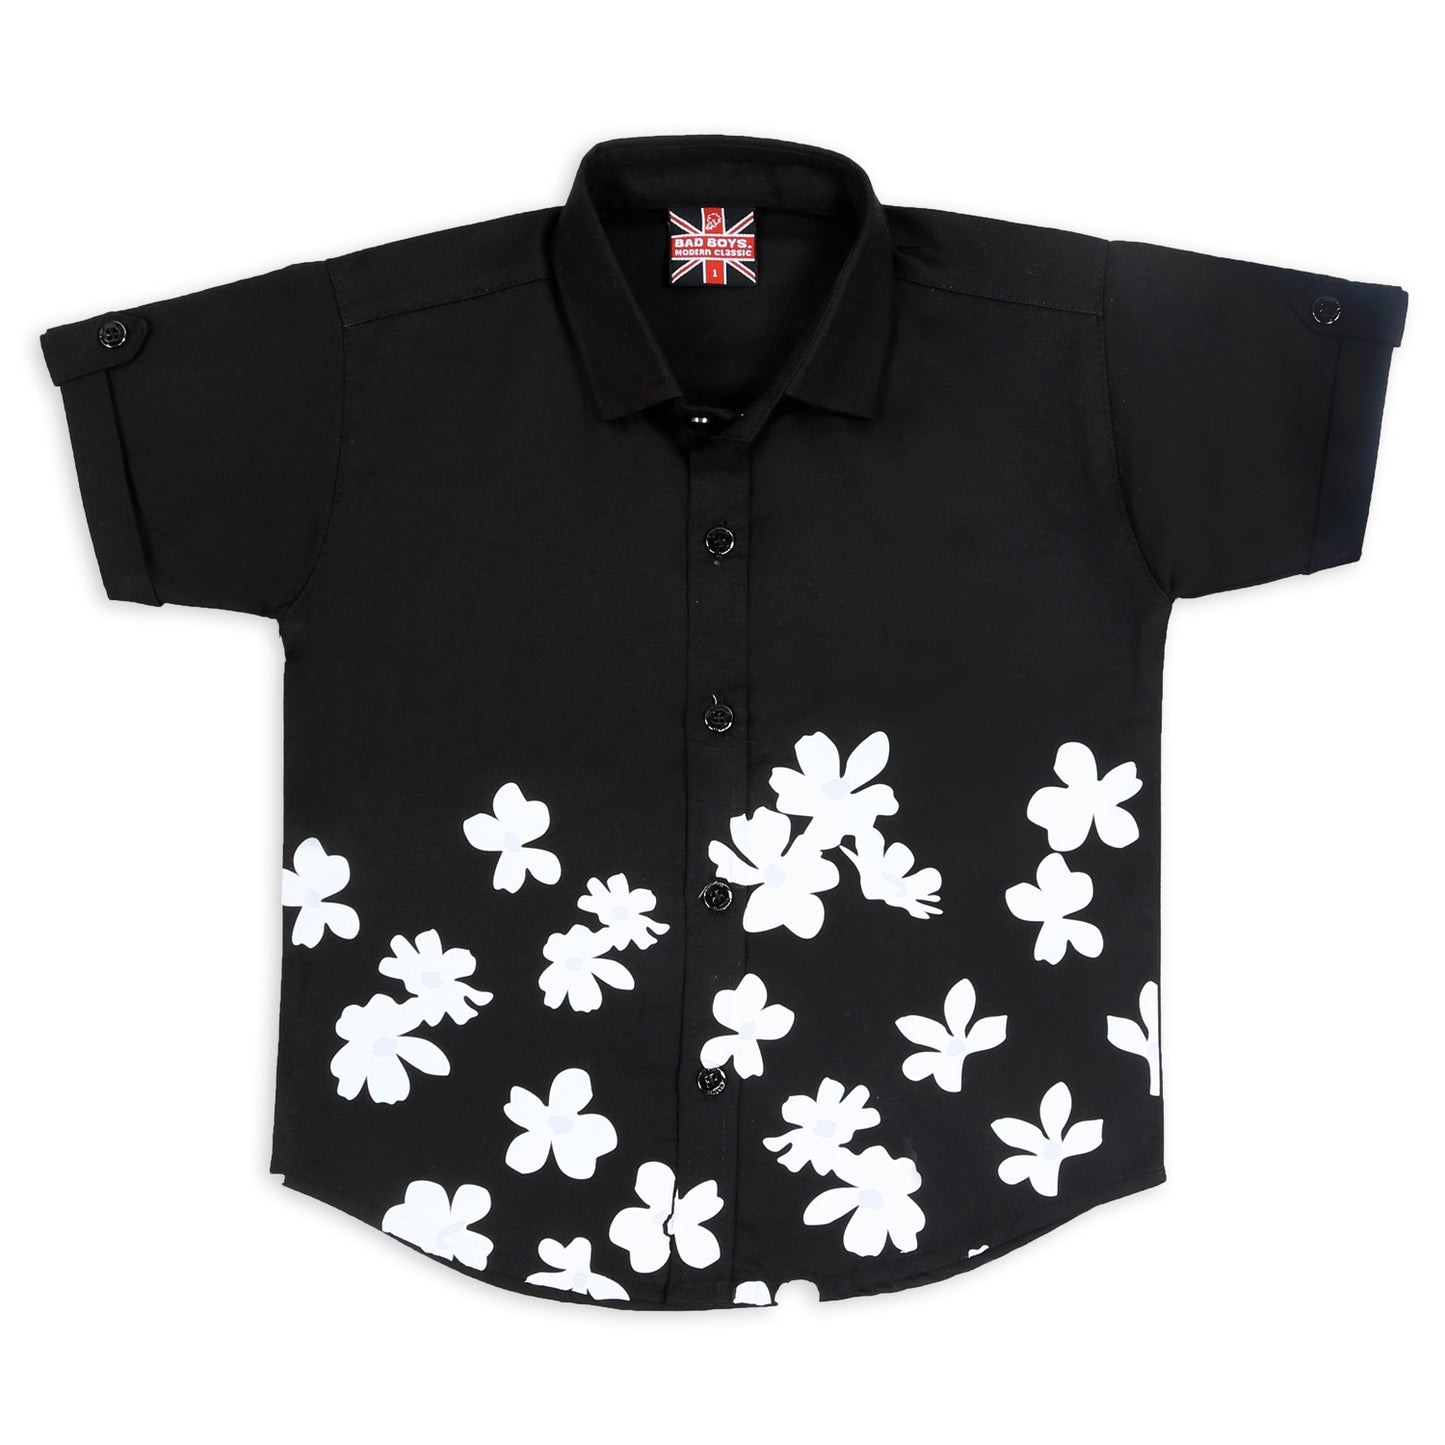 "Blossom in Style: Flower Power Shirt + Jeans Set for Boys!"